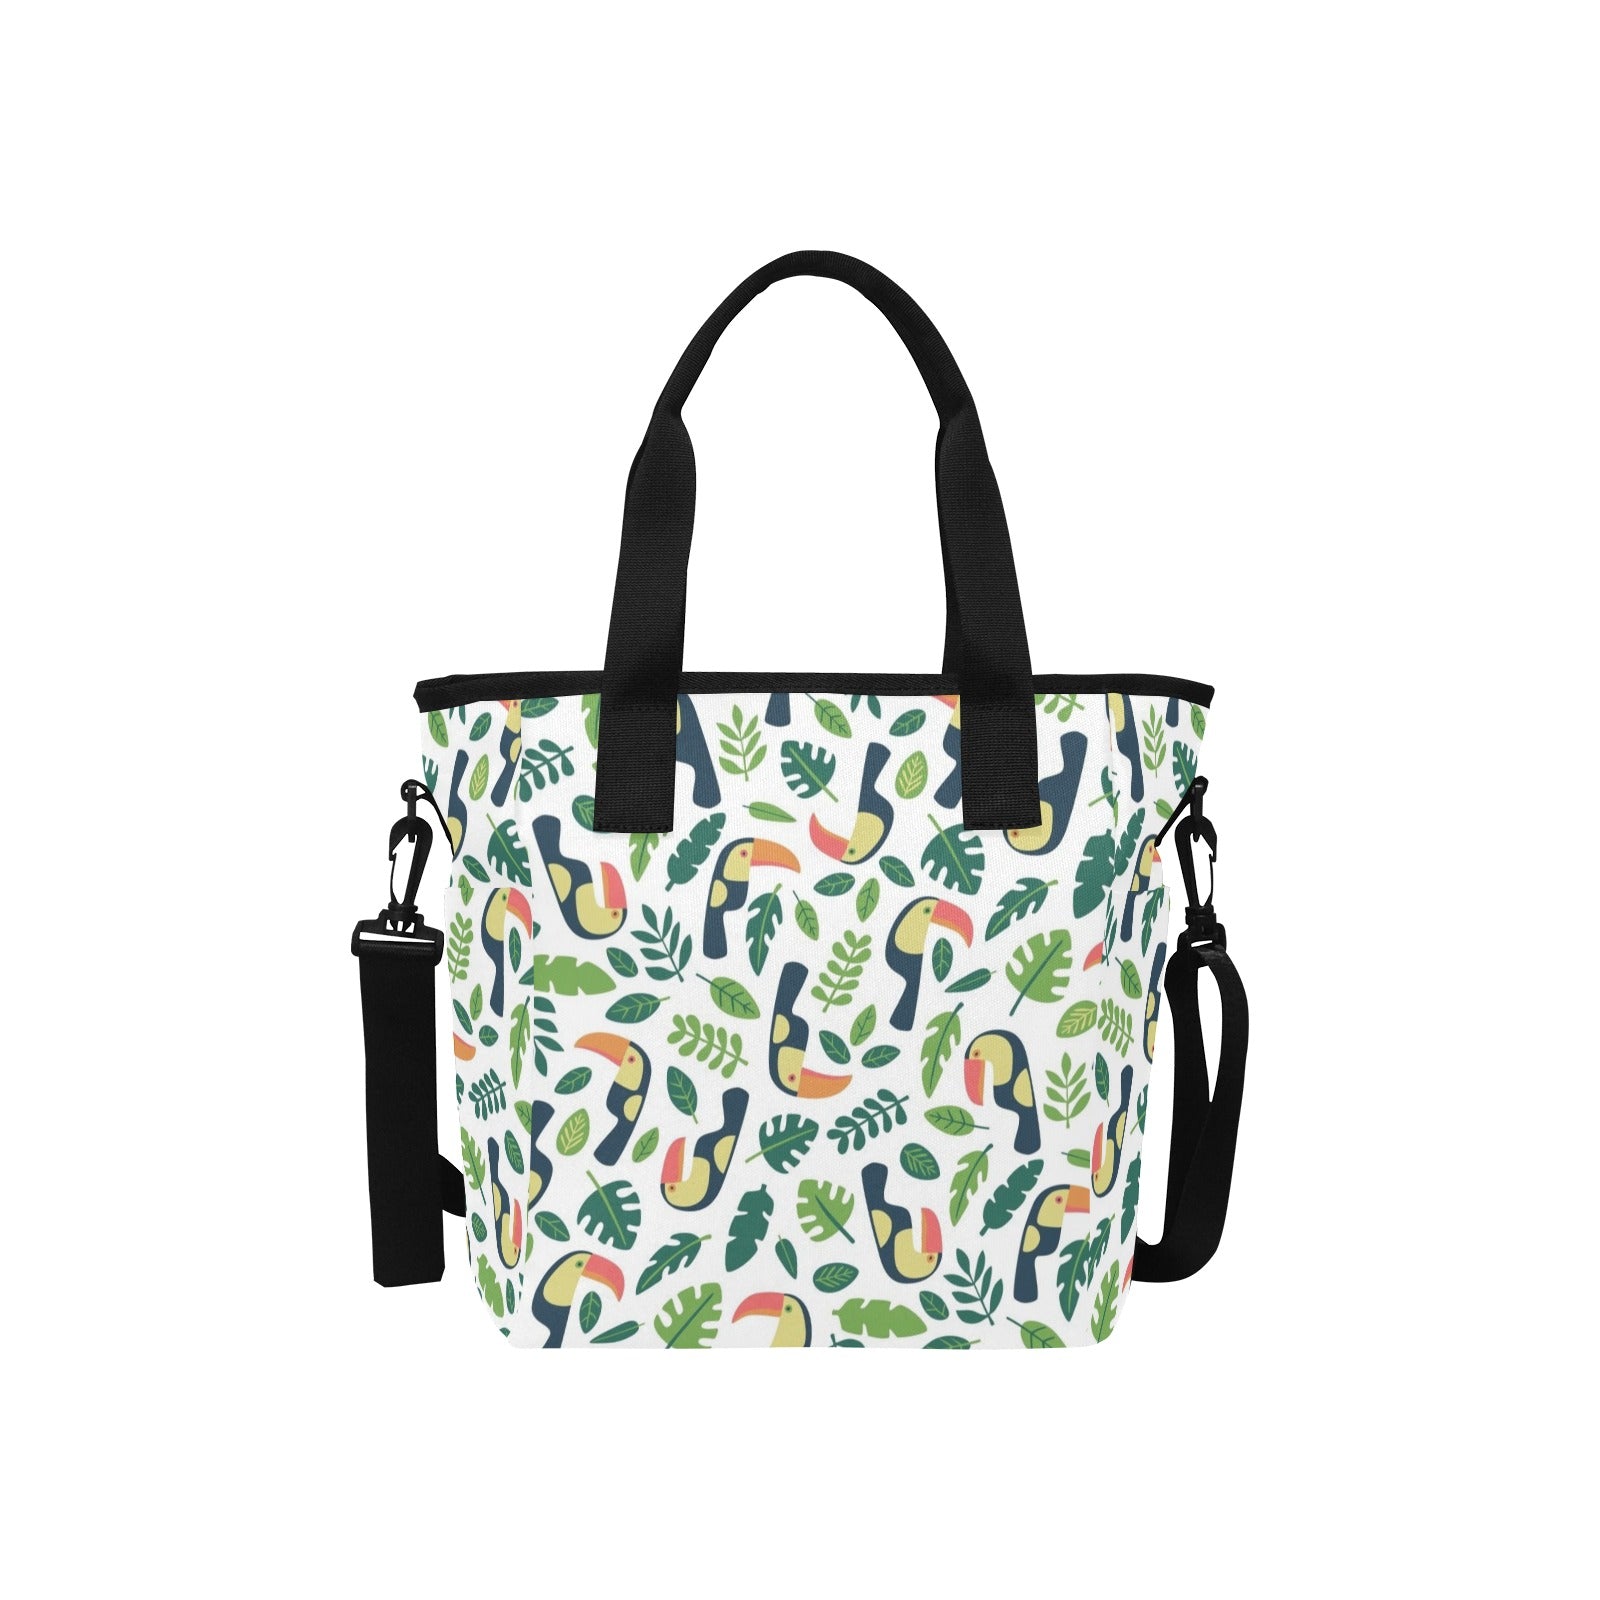 Toucans - Tote Bag with Shoulder Strap Nylon Tote Bag